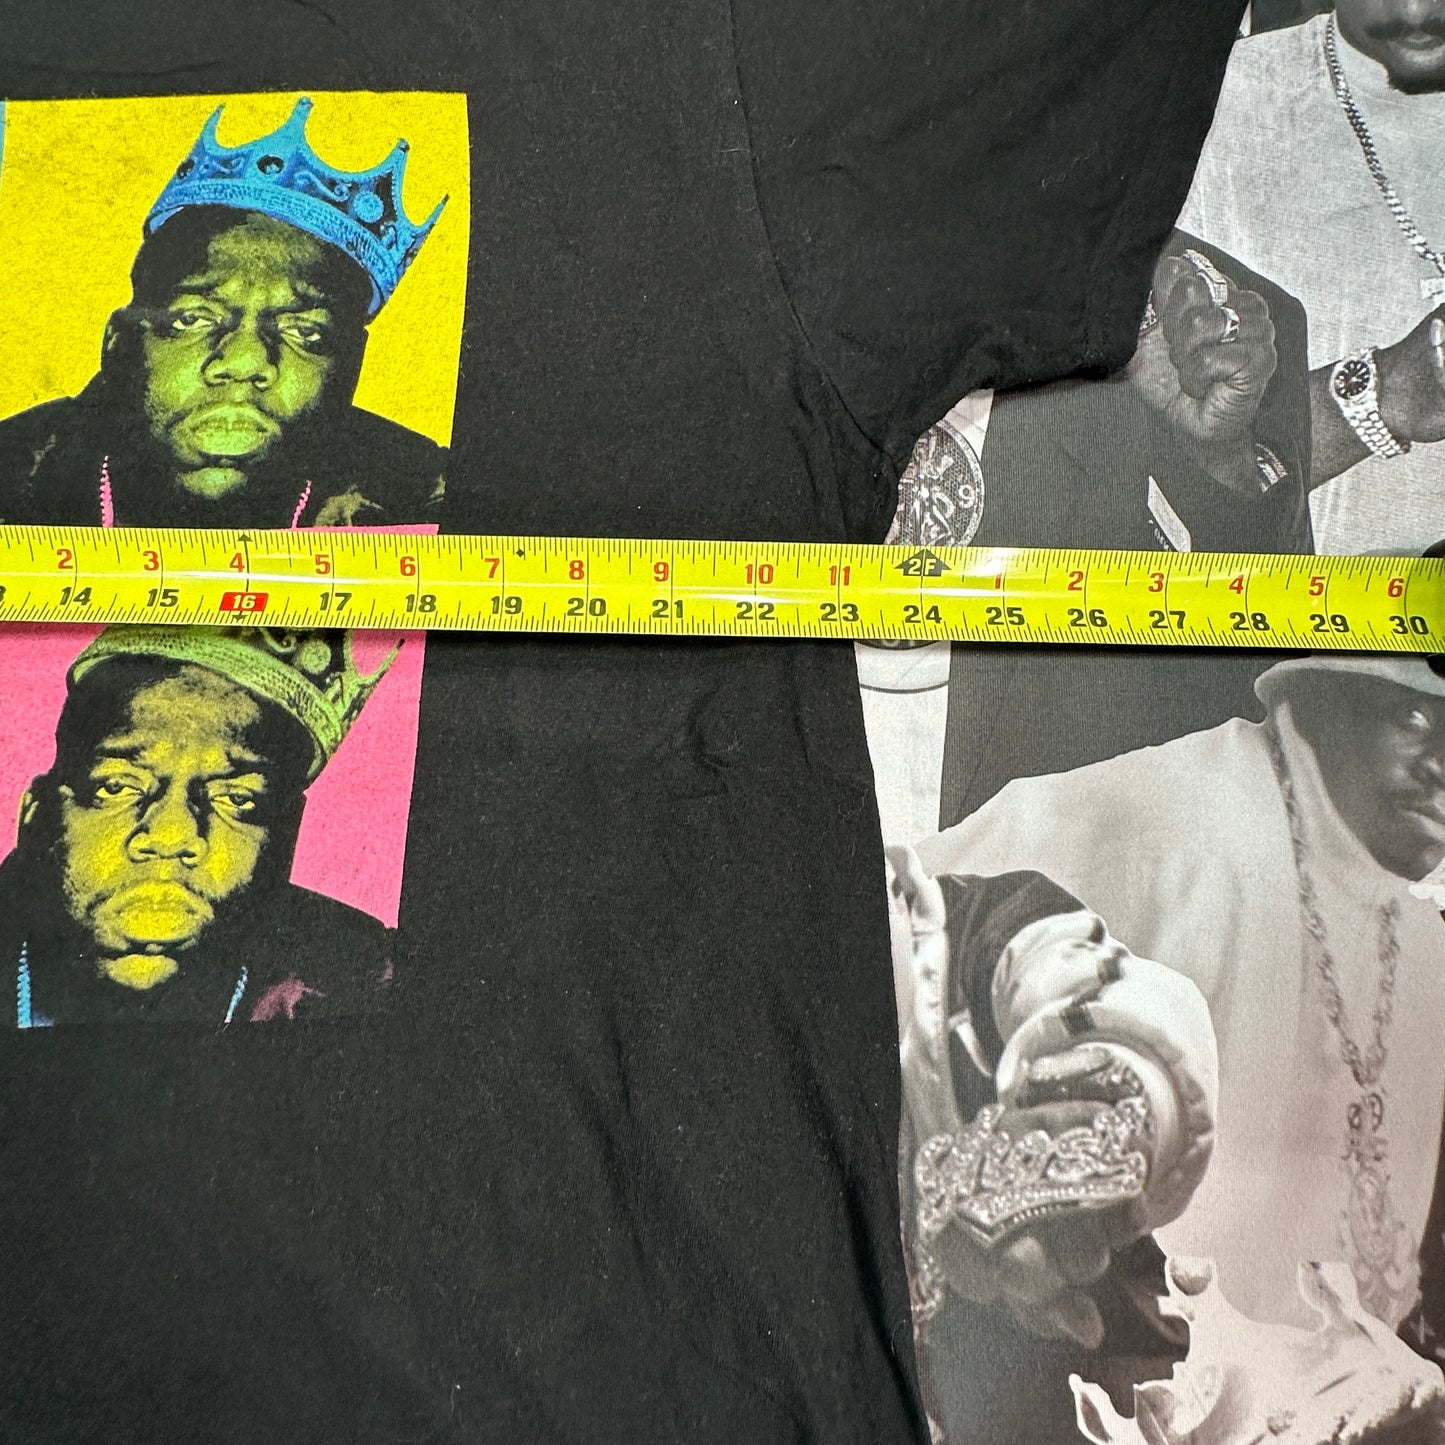 Retro Notorious B.I.G. Warhol Tee Size XXL